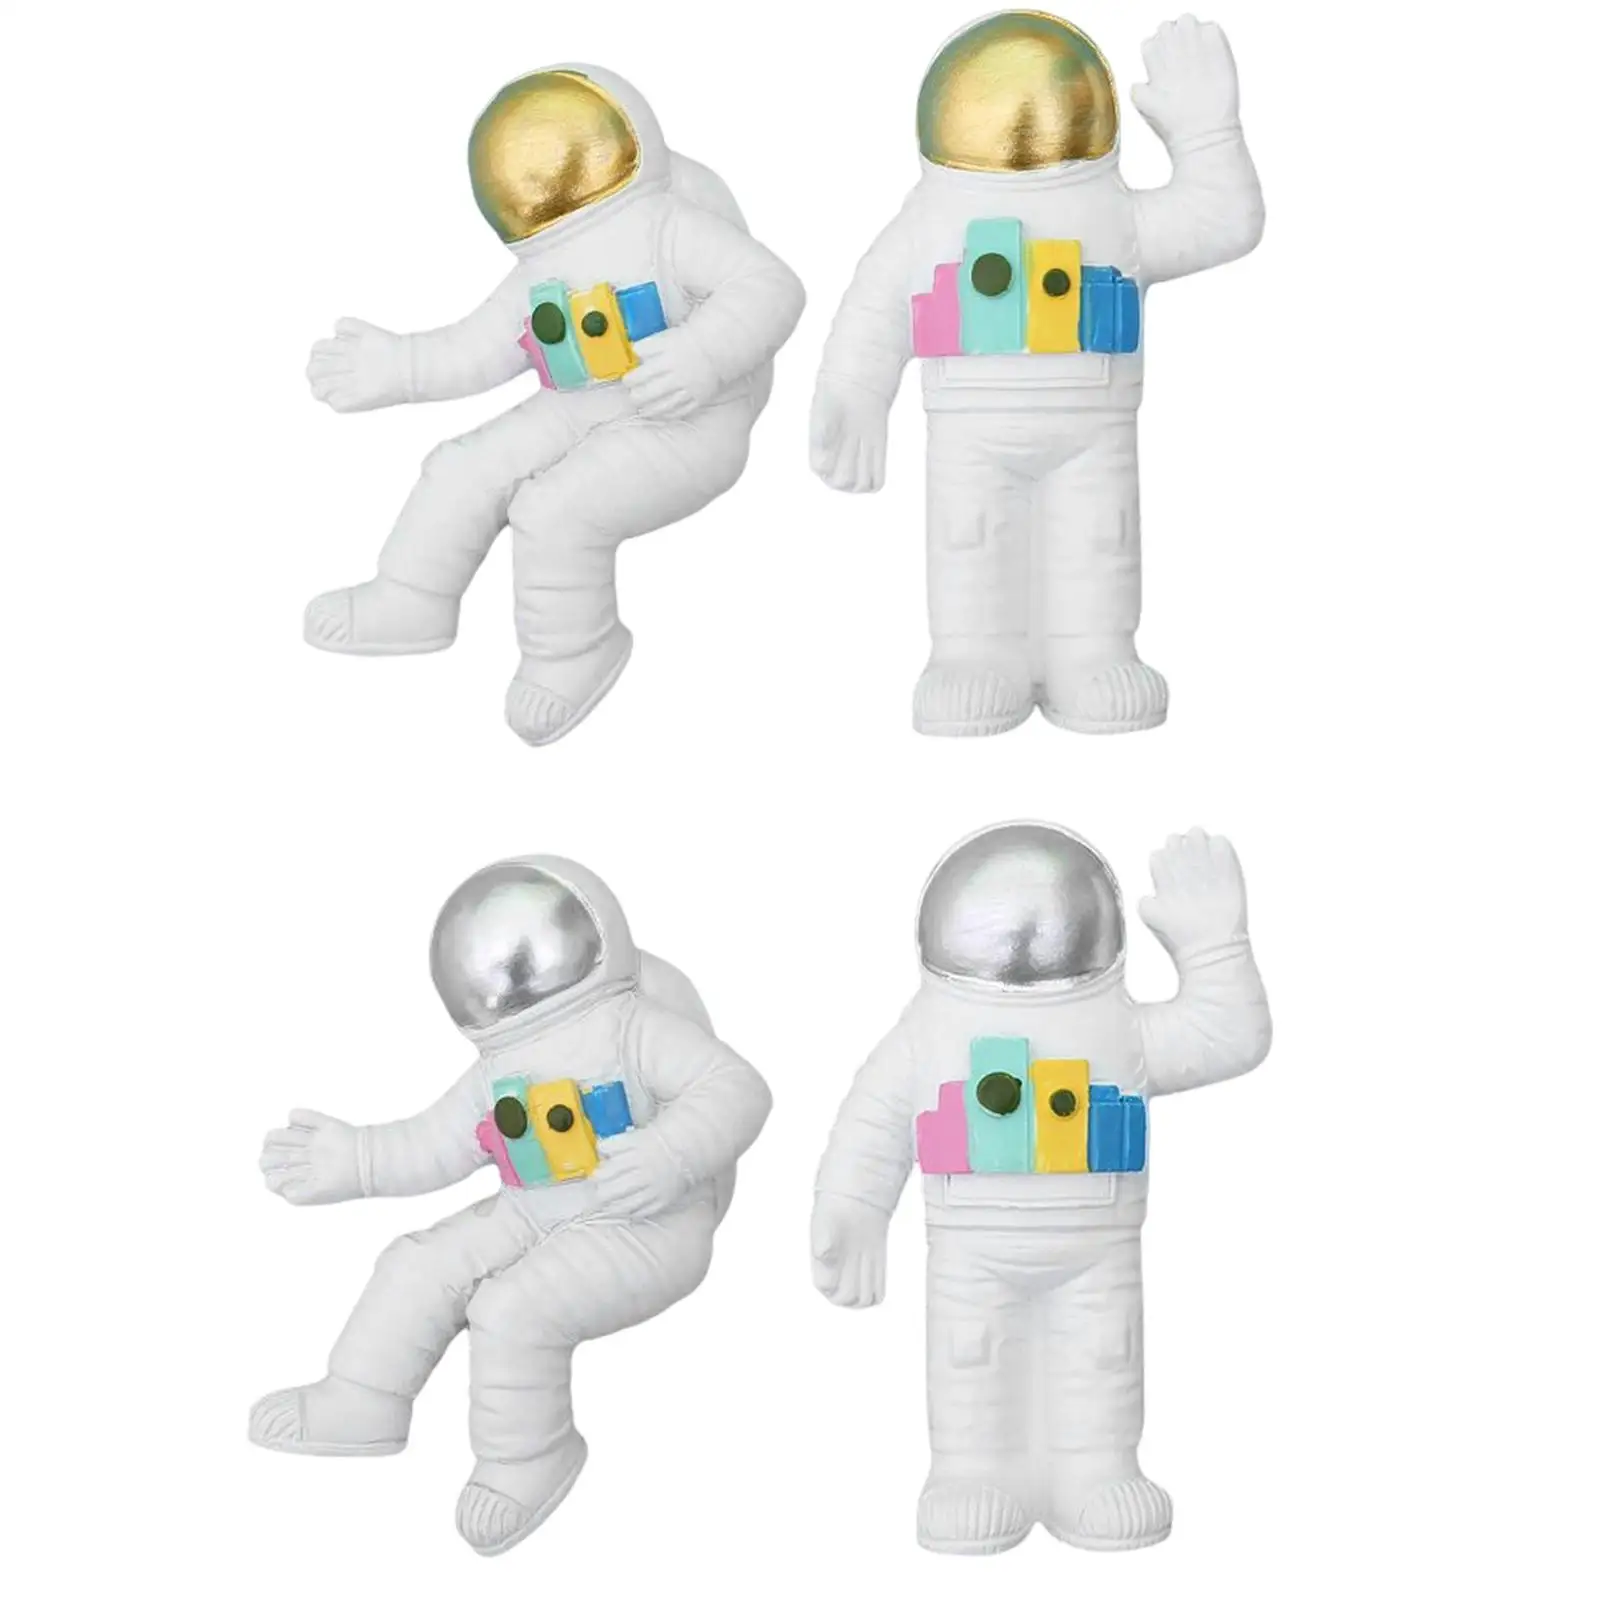 Cute Fridge Magnets Waving Astronaut Astronaut Adroable Decor Office Magnets Decorative Refrigerator Stickers for Kitchen